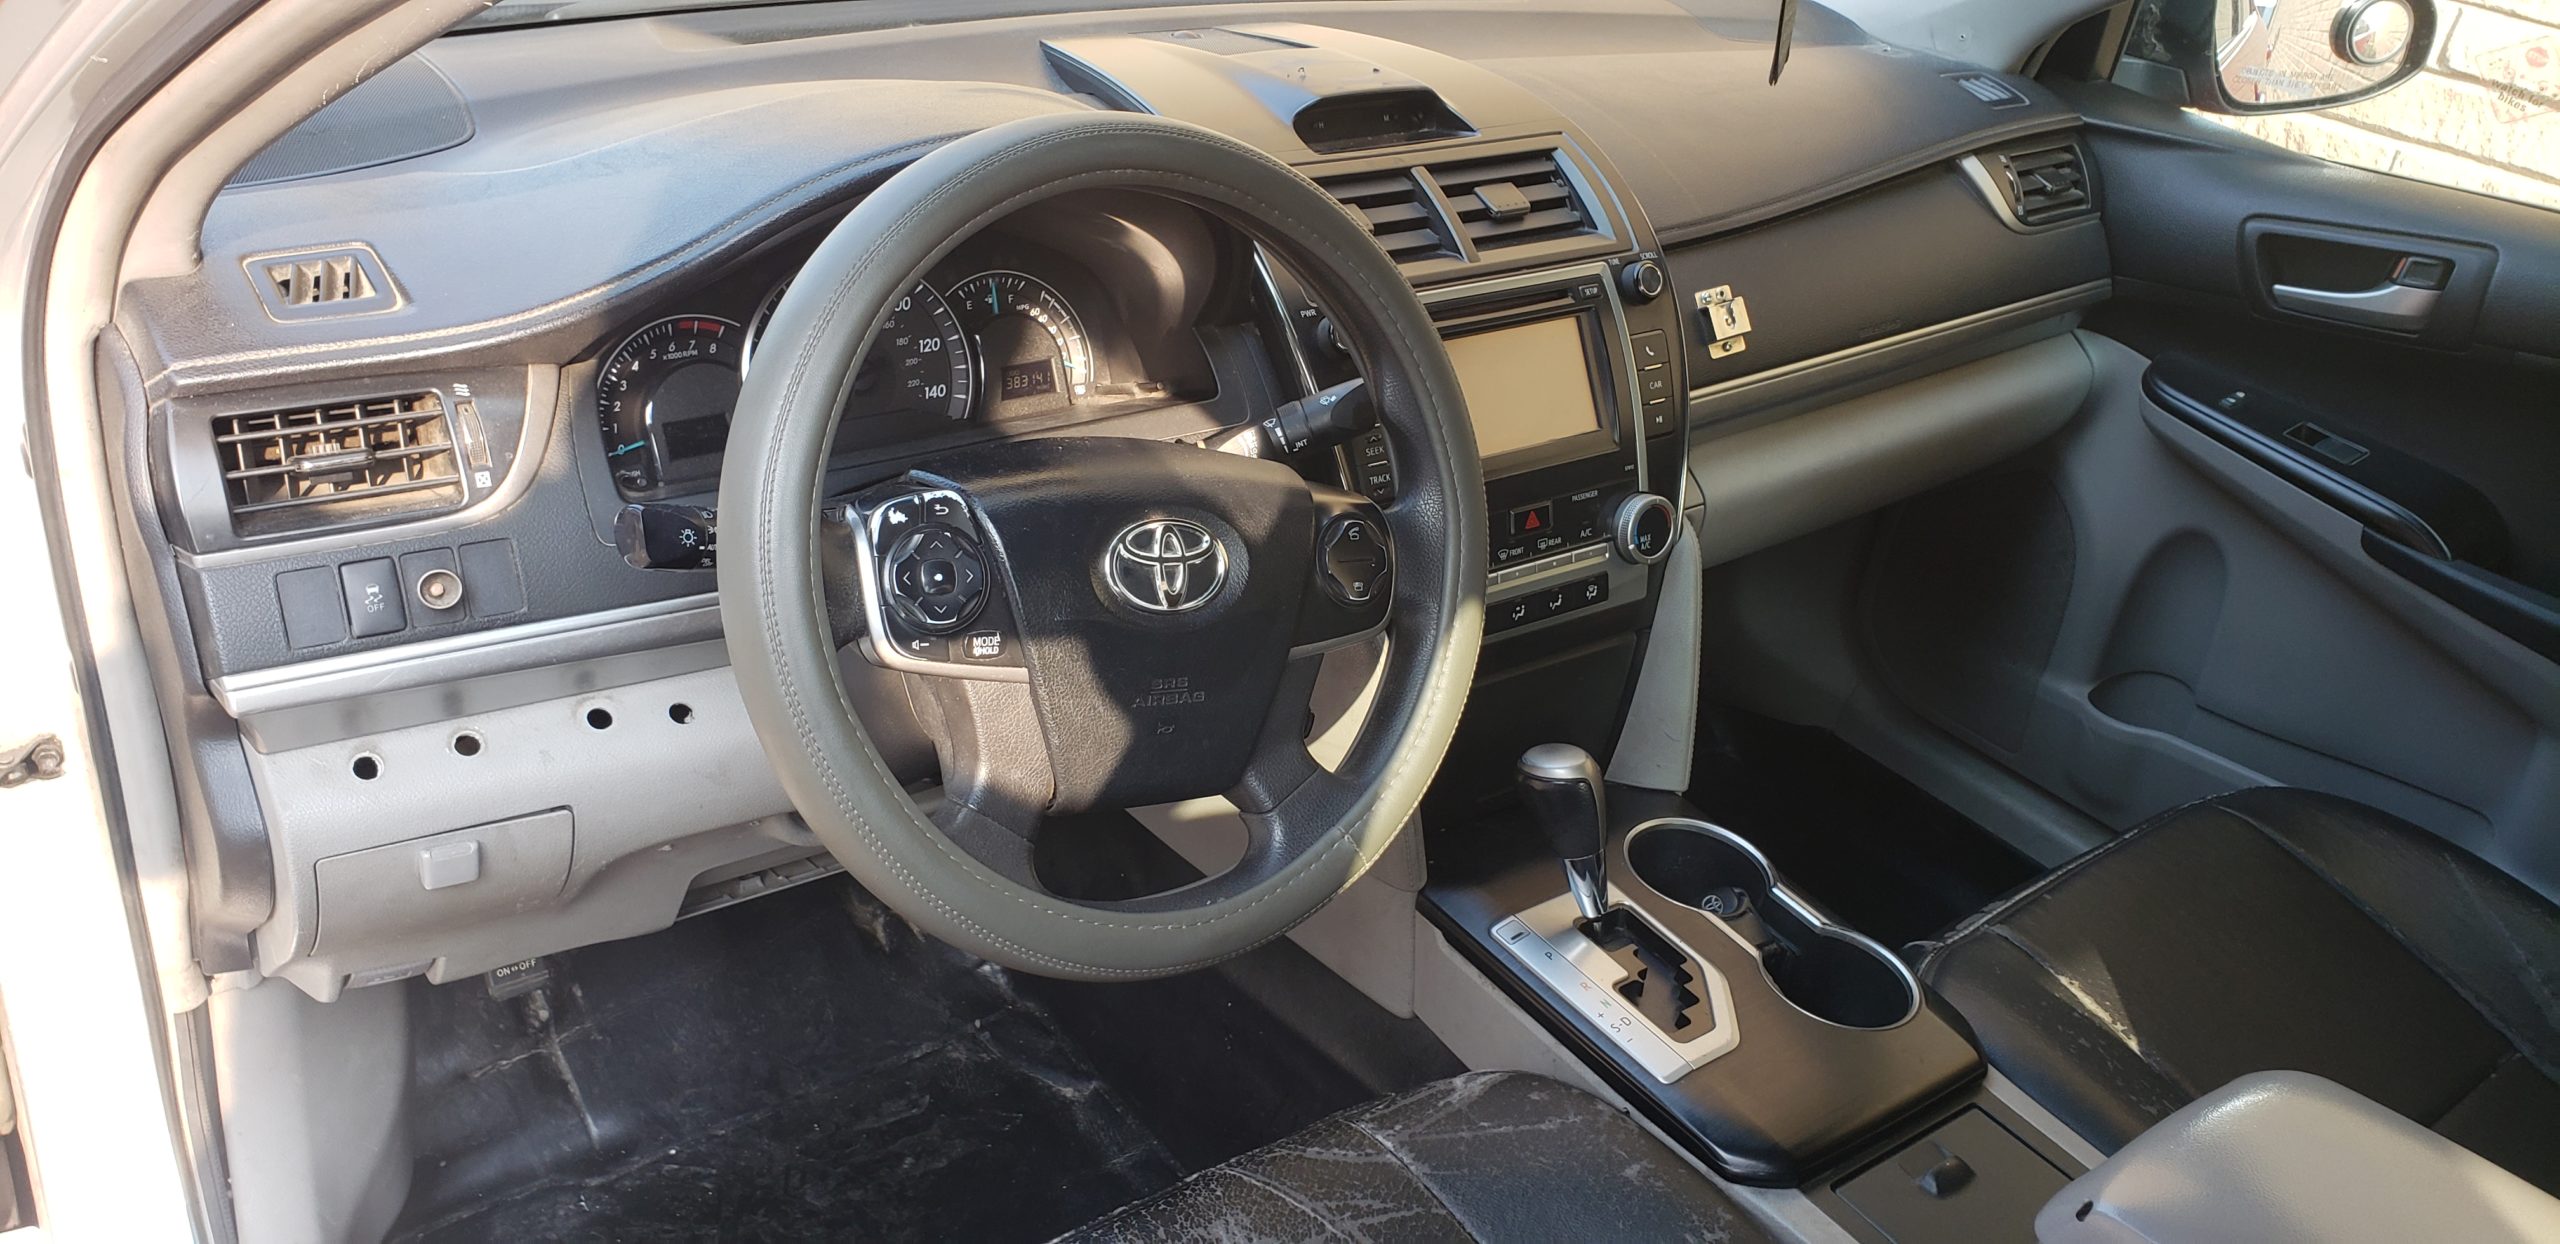 Toyota - Scrap Car Removal